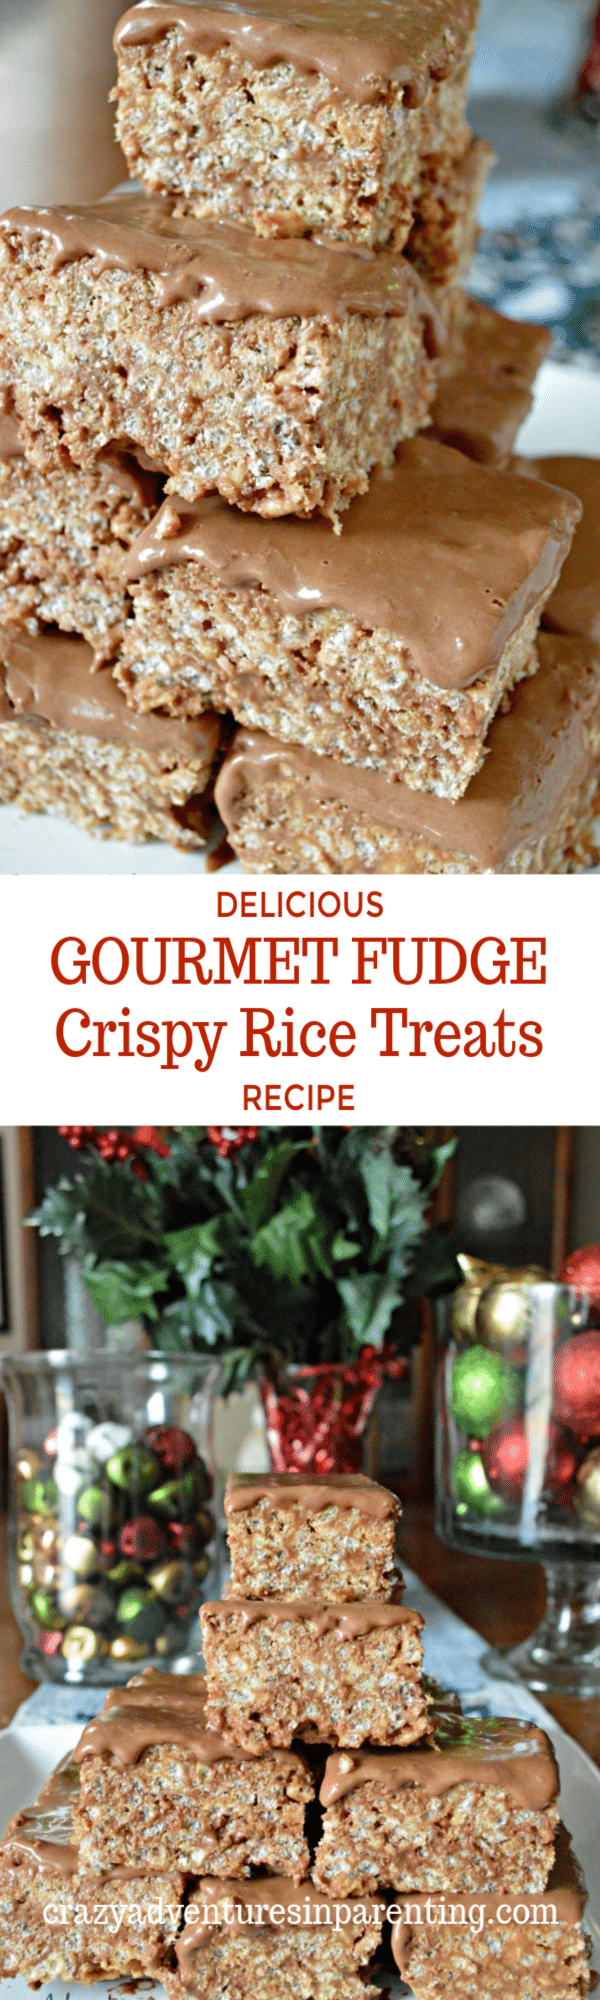 Gourmet Fudge Crispy Rice Treats